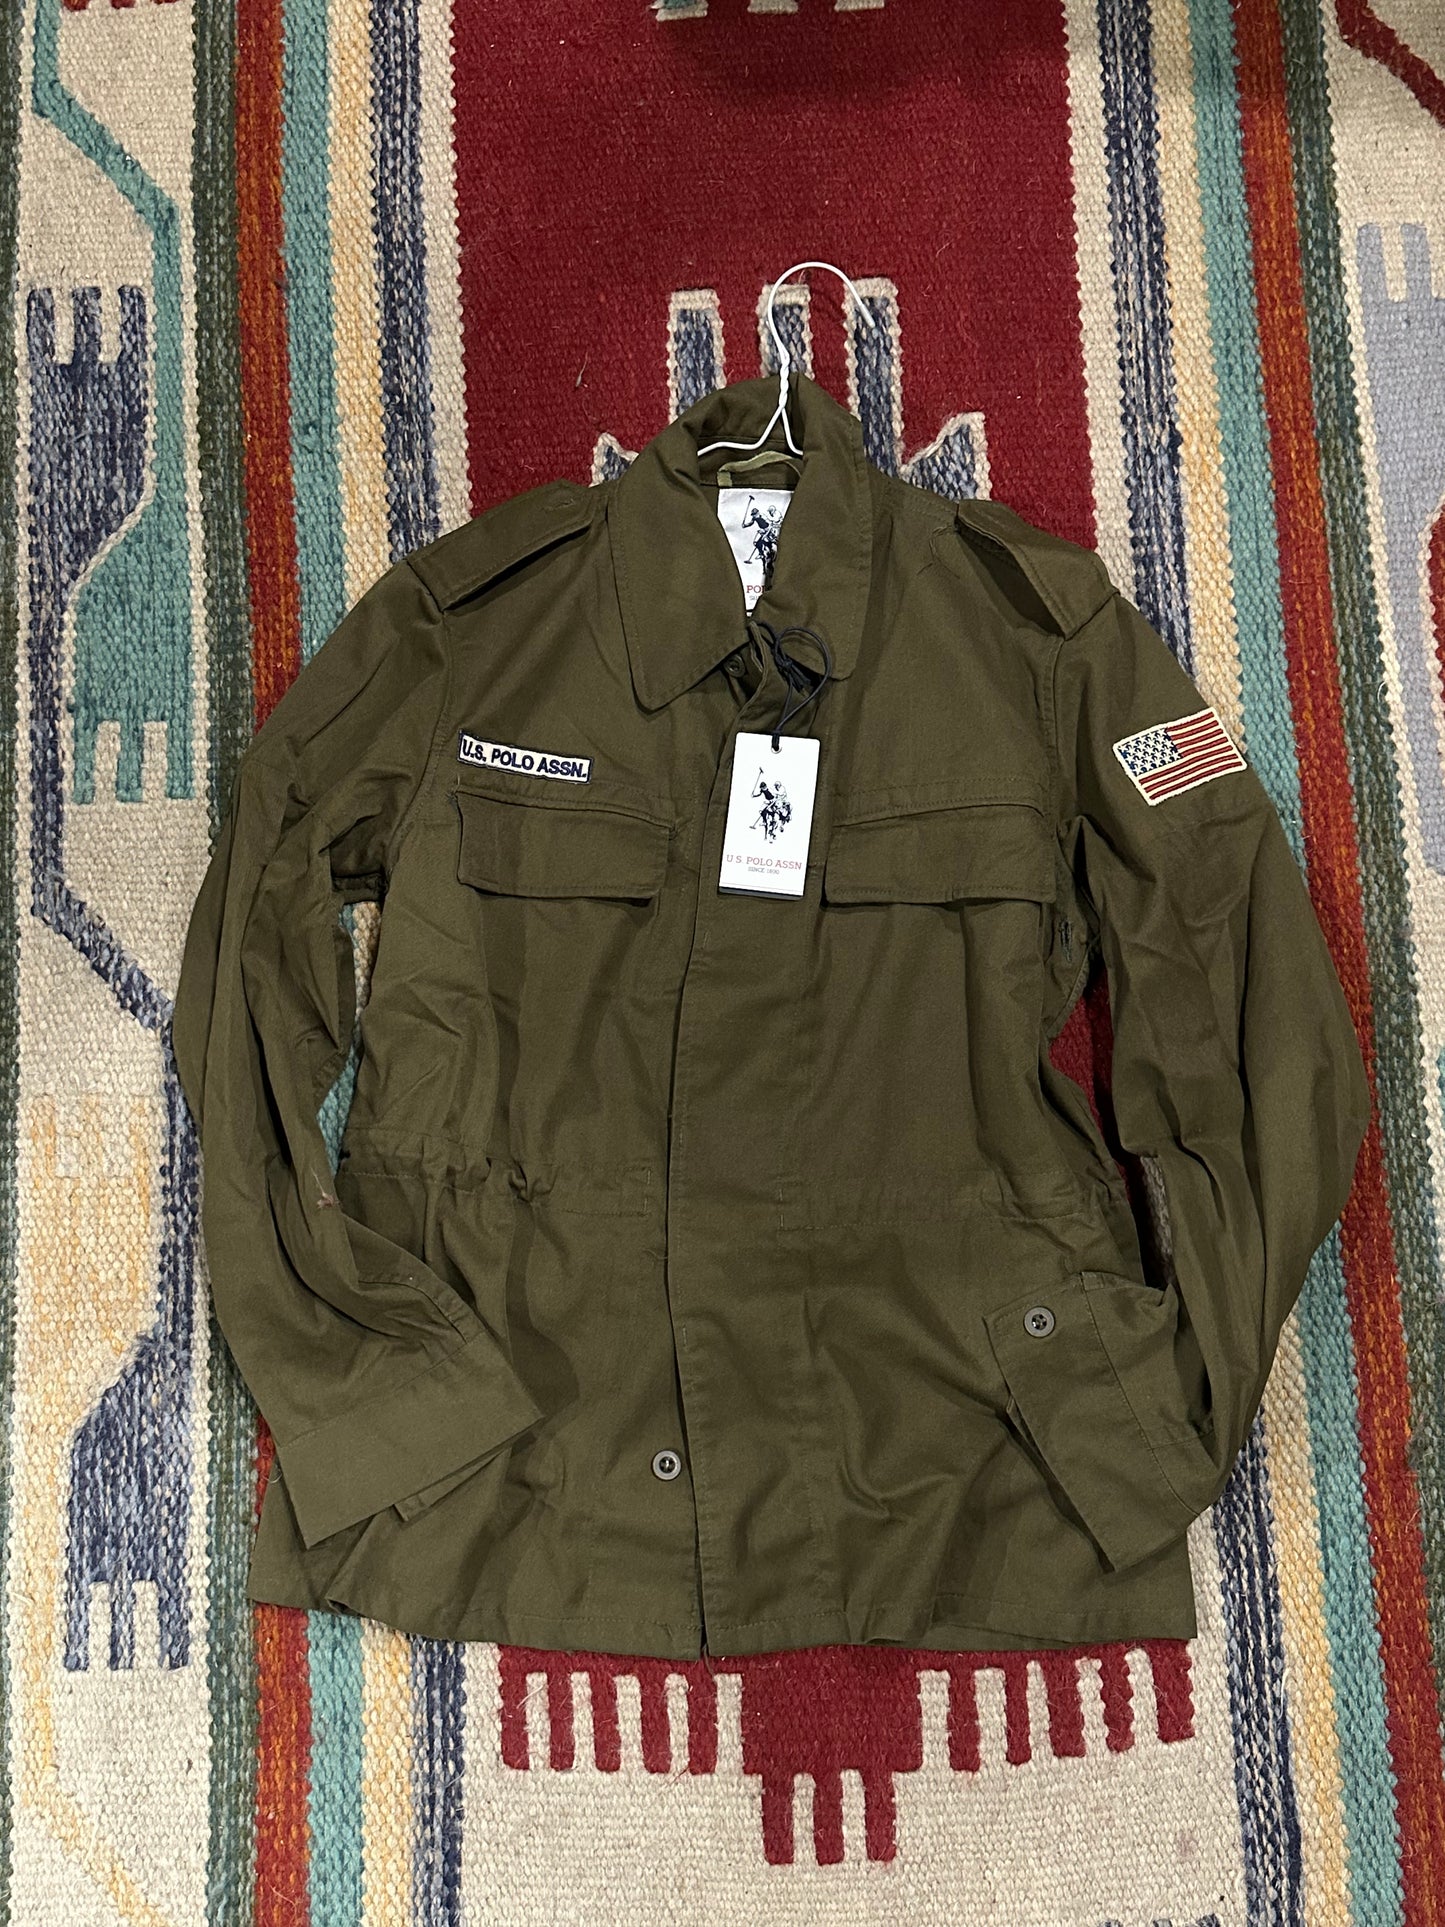 Military polo jacket